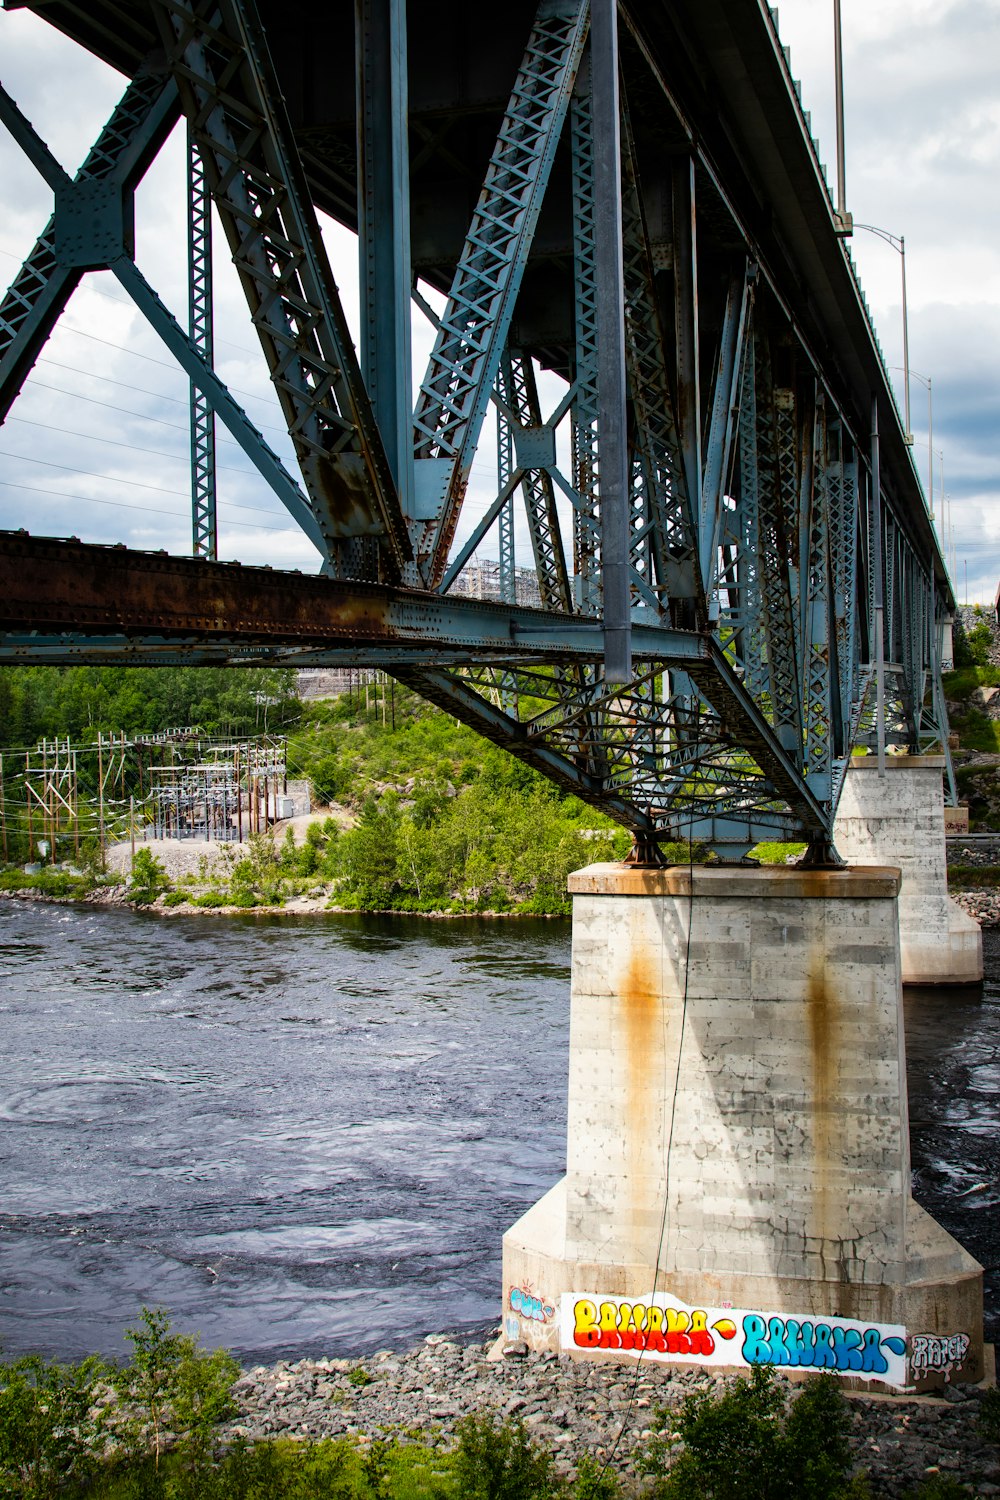 a bridge over a river with graffiti on it